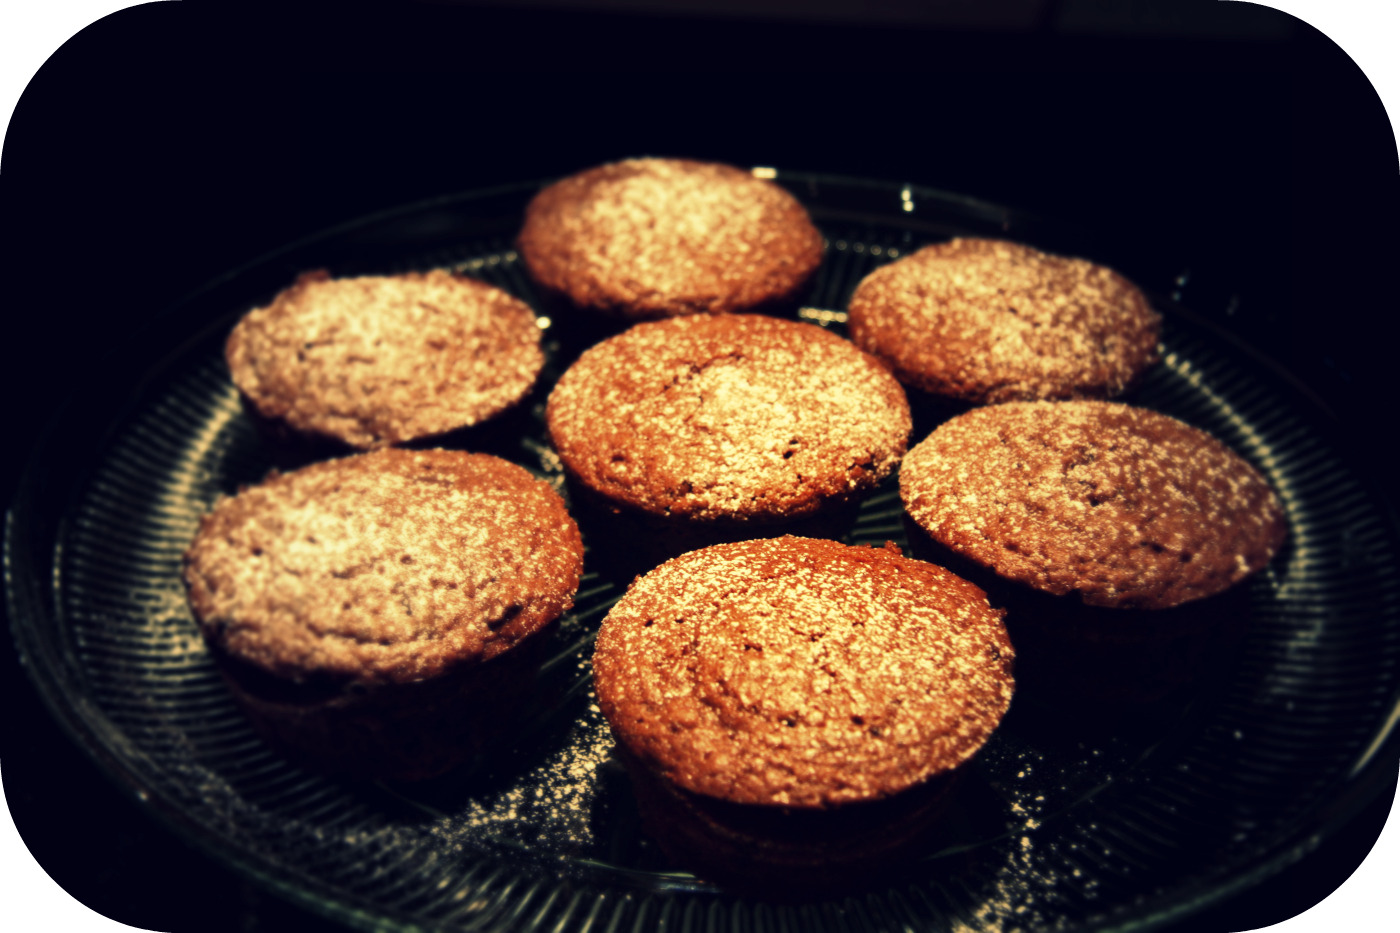 http://4.bp.blogspot.com/_-cgl7-4yUV0/S8Ehh4eVfEI/AAAAAAAAByc/SNiZgzrX80s/s1600/vegan+chocolate+muffins.jpg